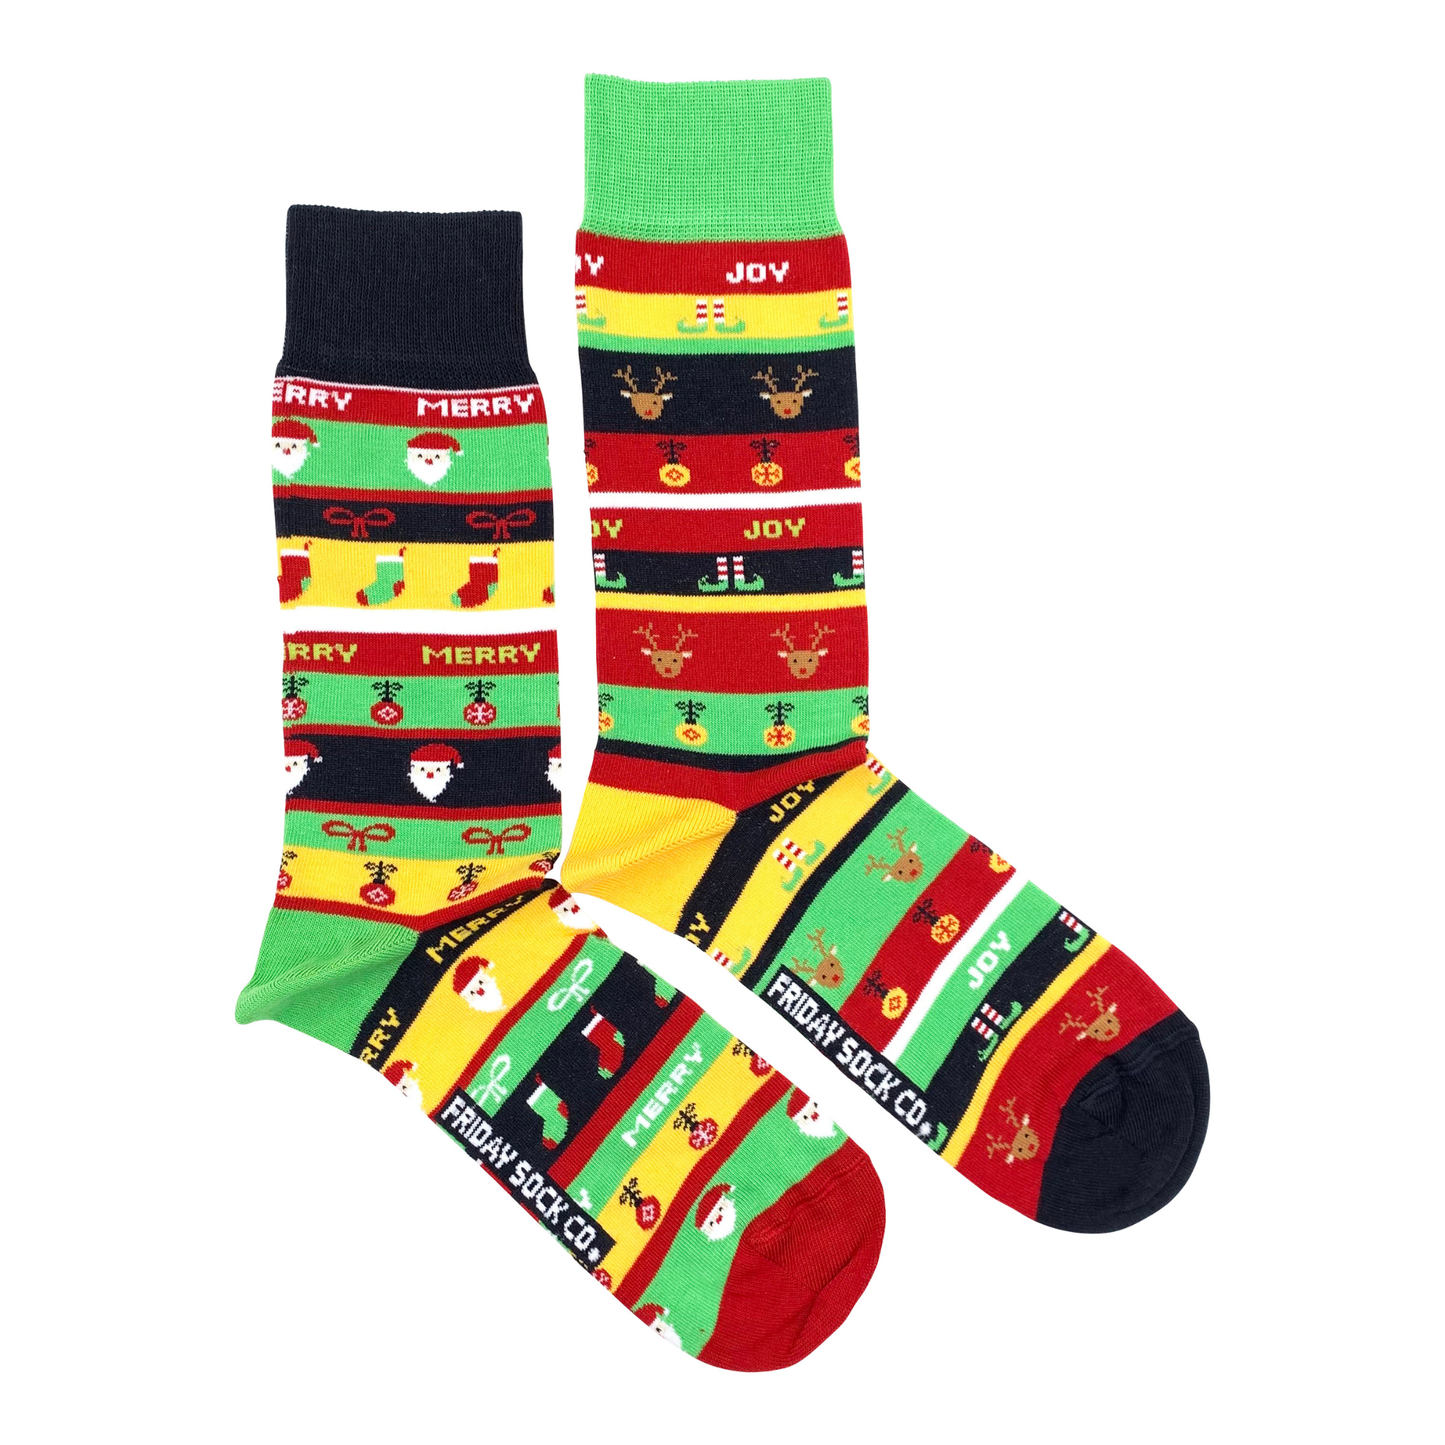 Men's Ugly Christmas Socks | Merry & Joy | Mismatched